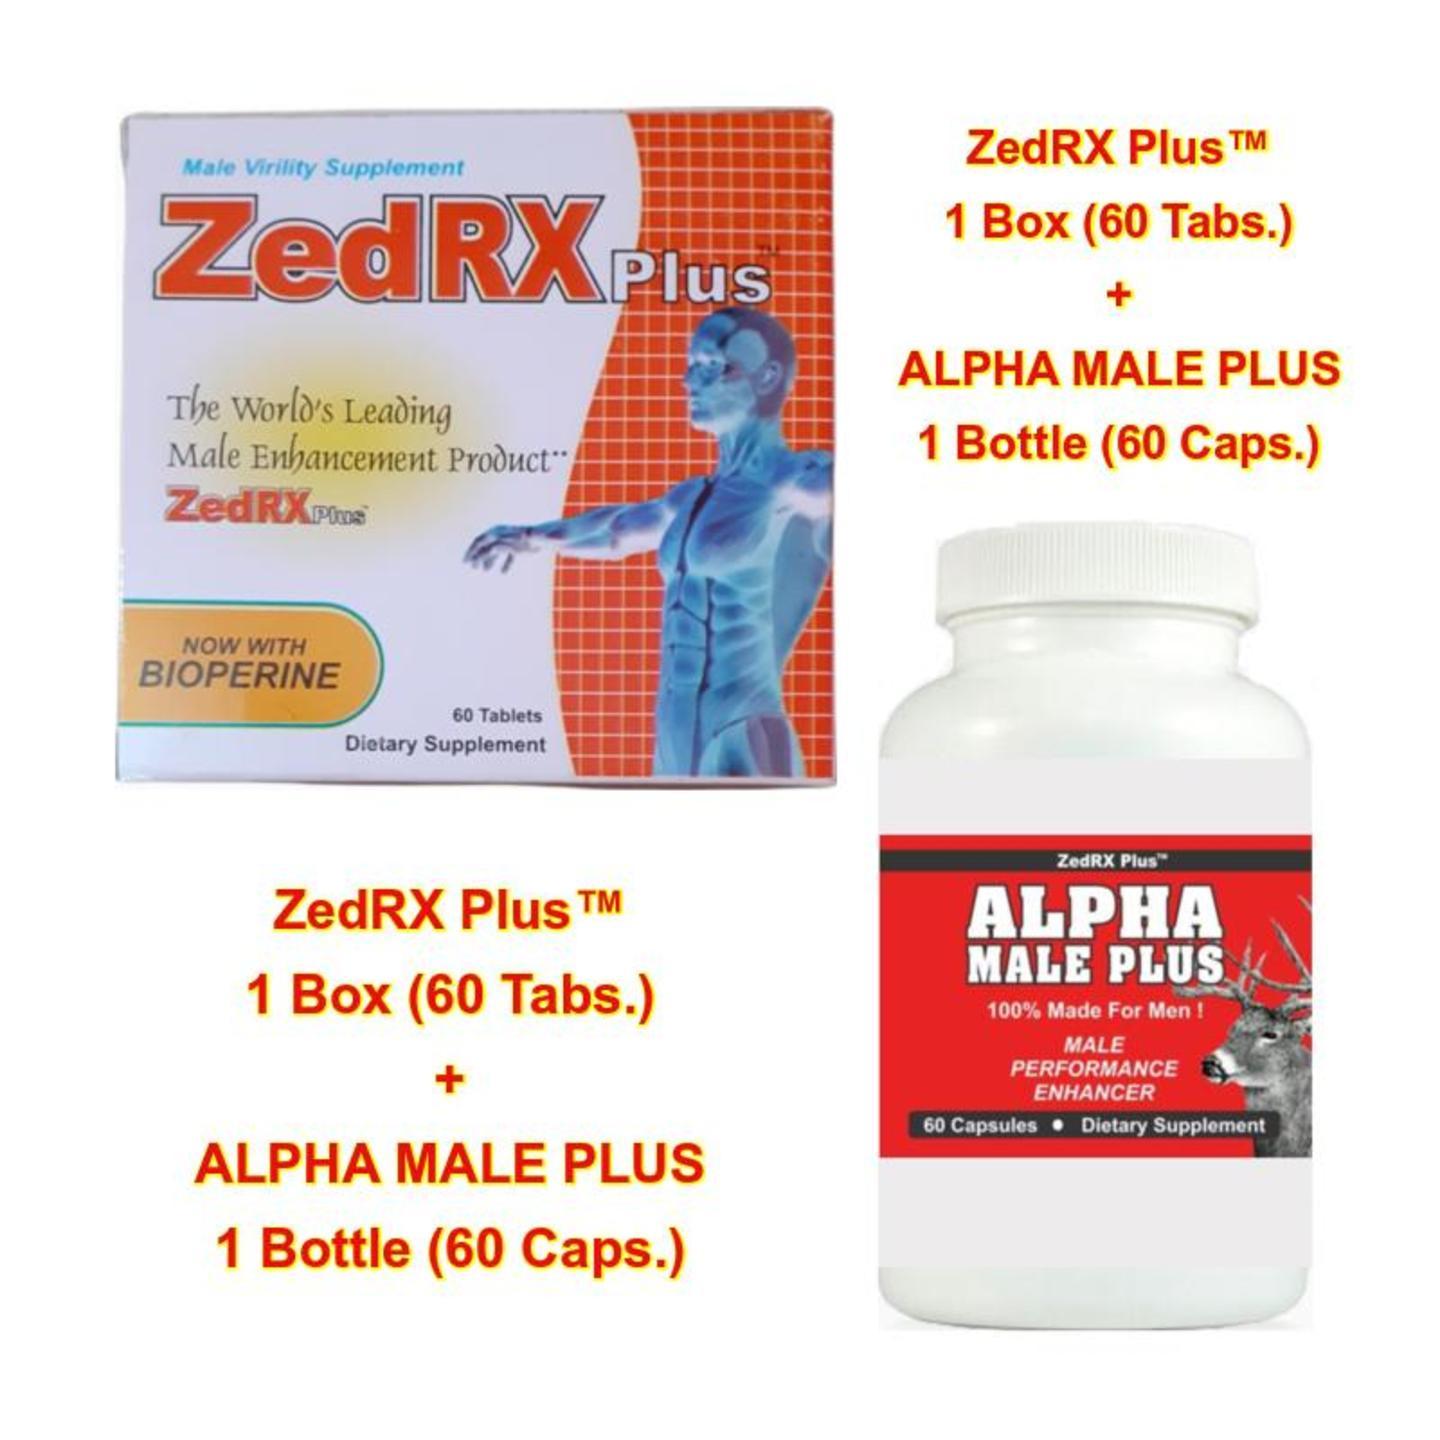 ZedRX Plus - Penis Erection & Enlargement Pills - One Box - 60 Tablets & ALPHA MALE PLUS - Sexual Performance Enhancement & Erection Pills - One Bottle - 60 Capsules Combo Pack